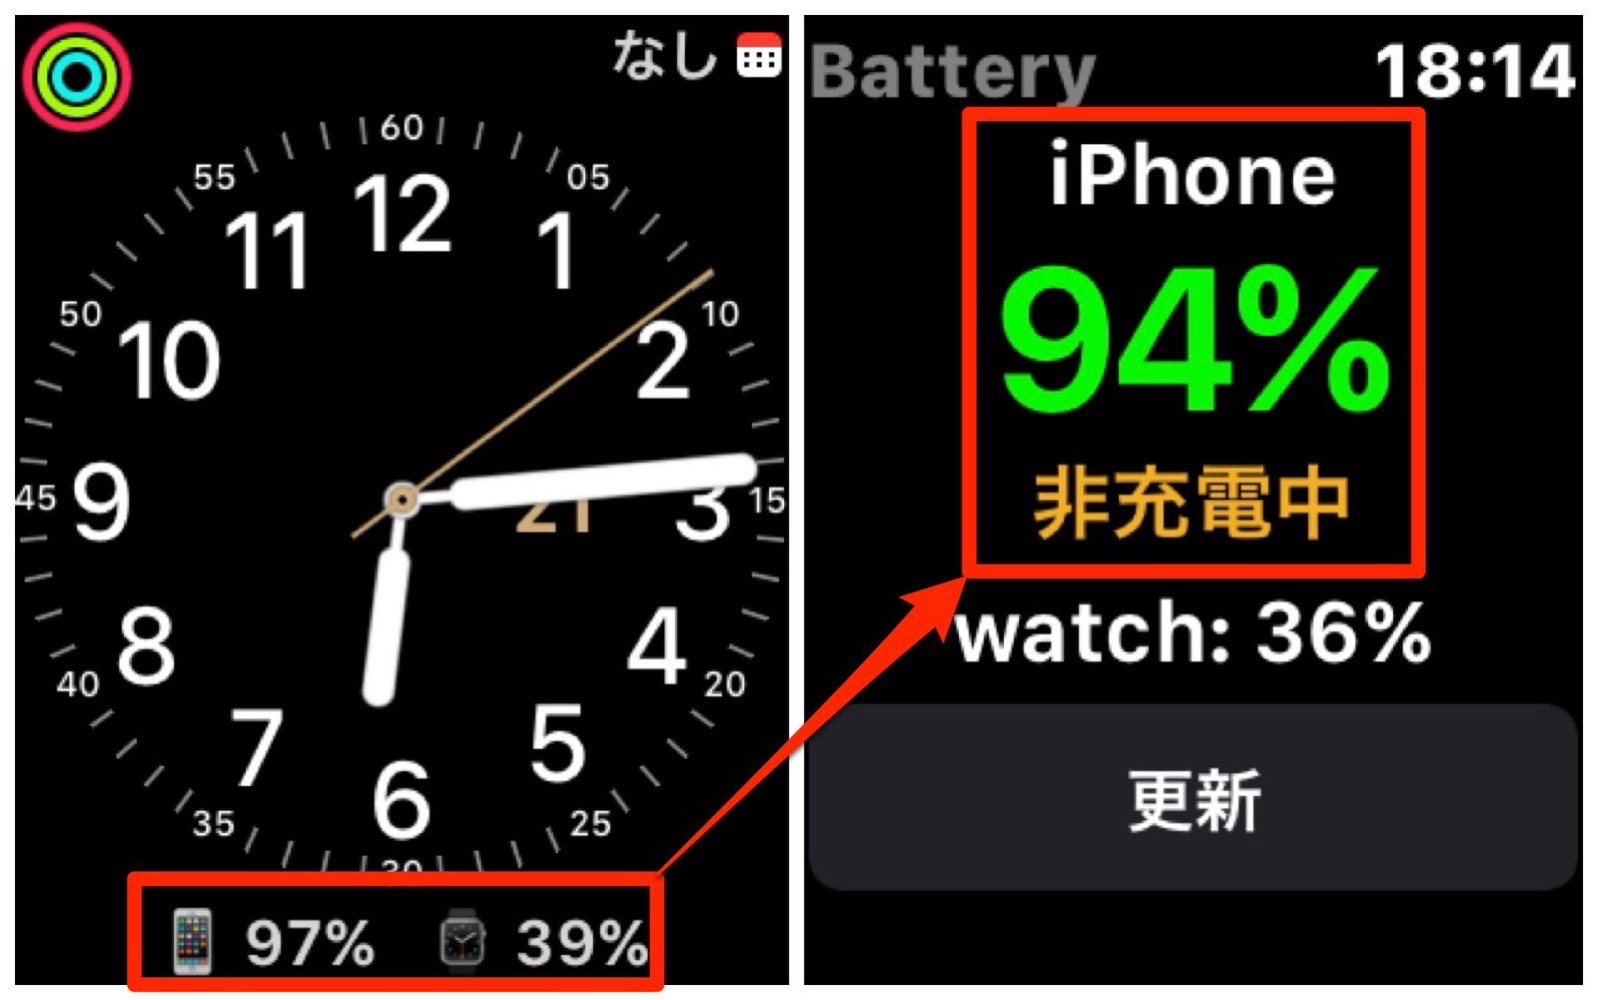 iPhone's BatteryPhone-2